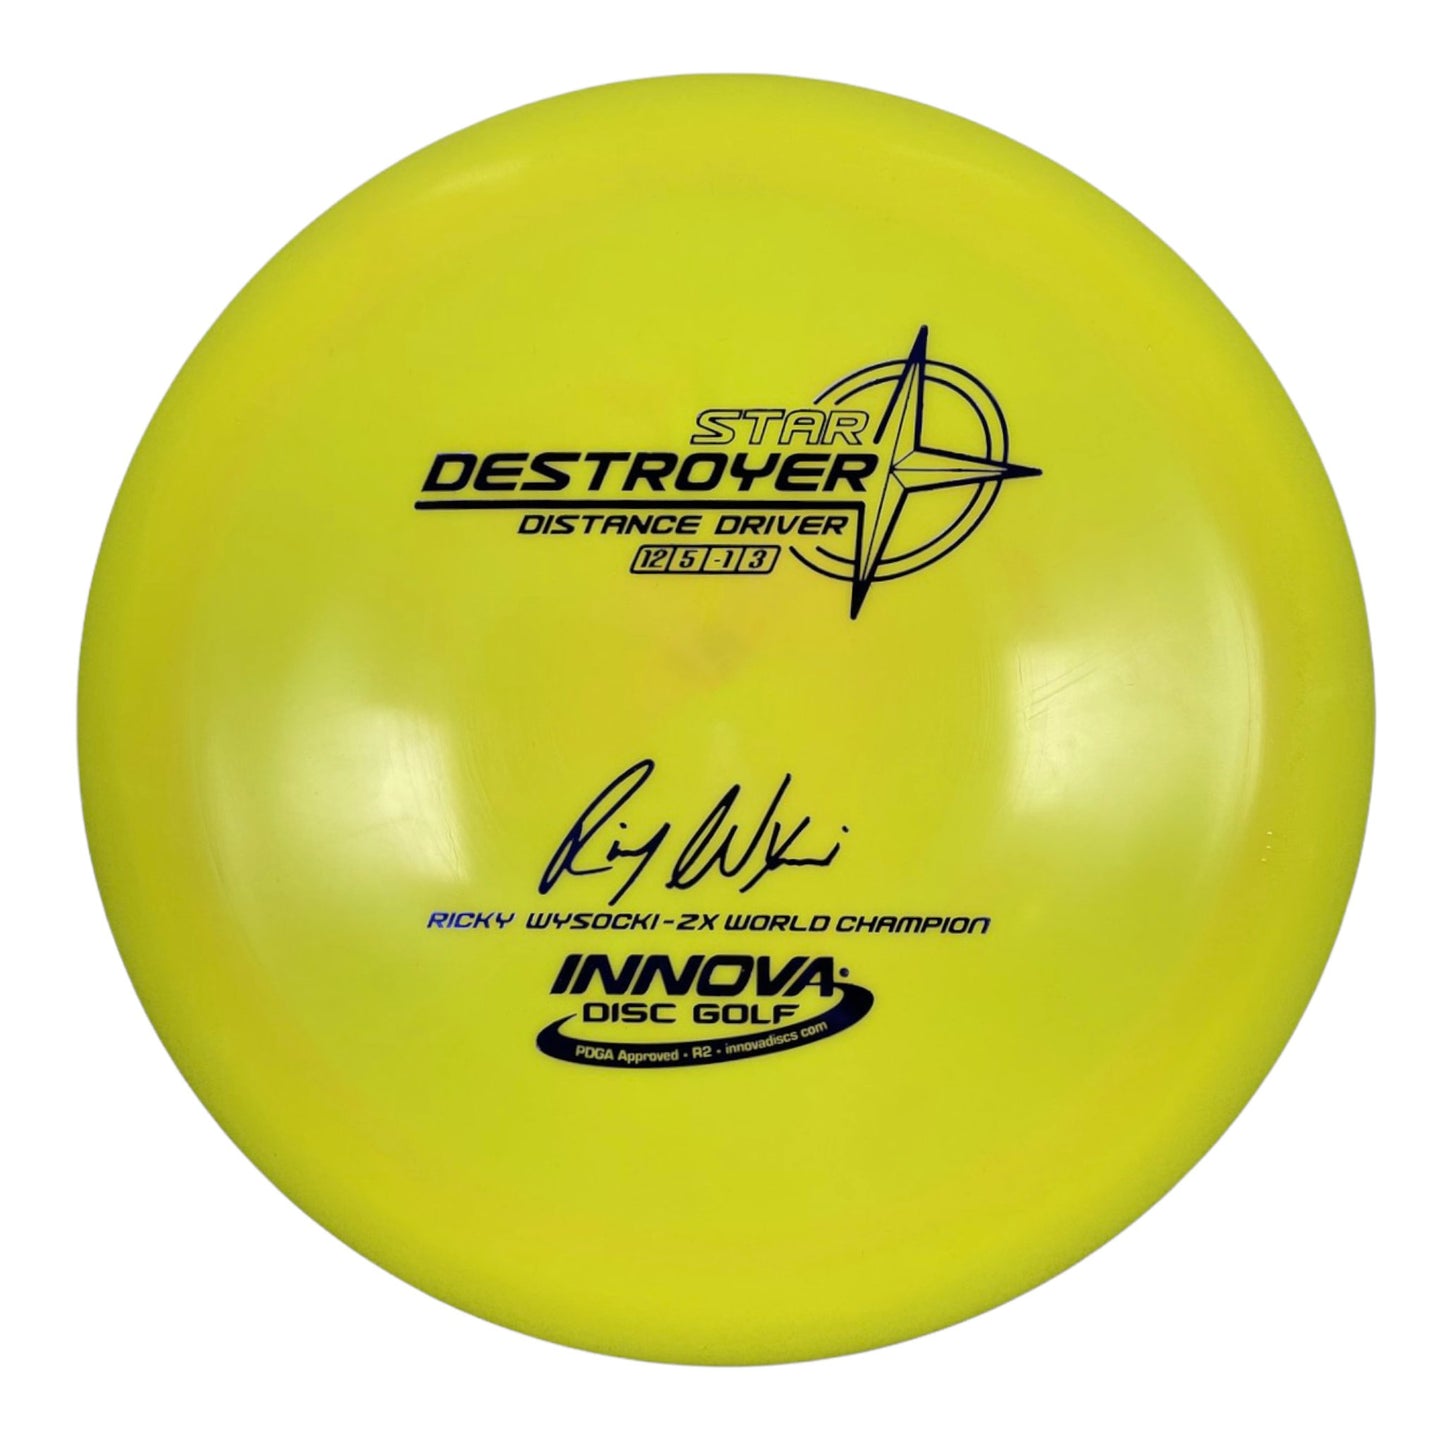 Innova Champion Discs Destroyer | Star | Yellow/Blue 171g (Ricky Wysocki) Disc Golf